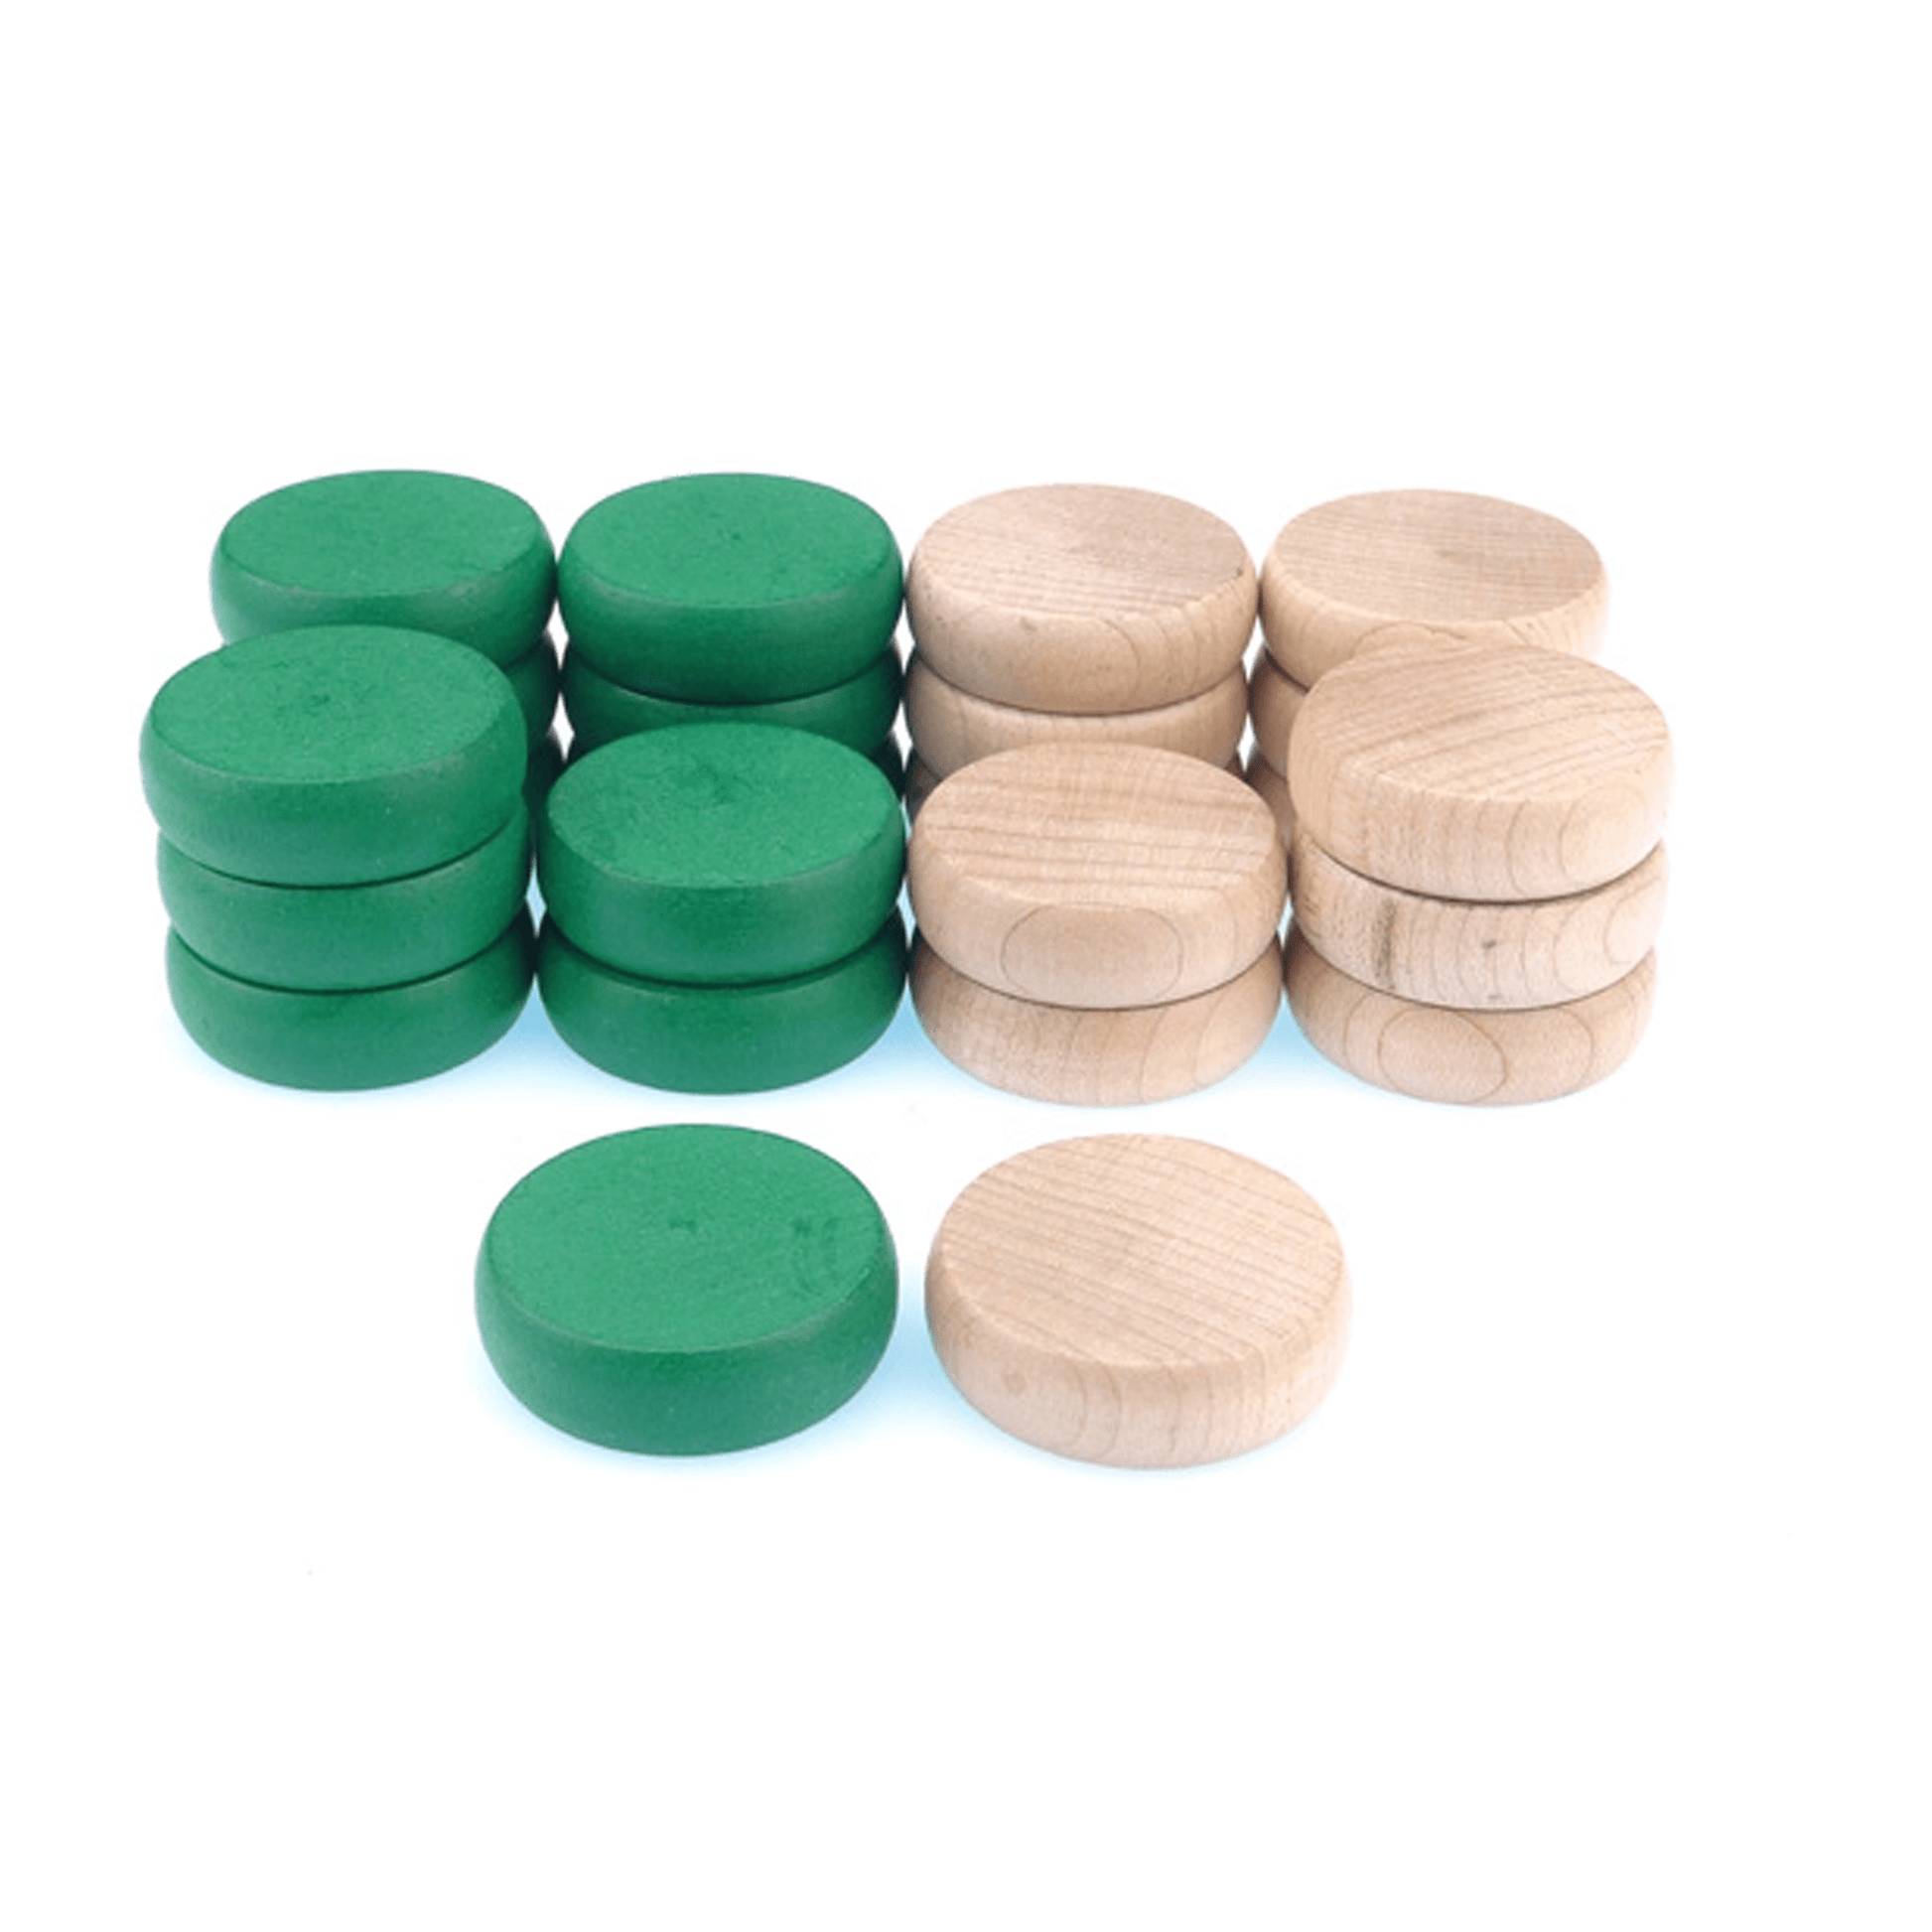 26 green clear crokinole tournament discs